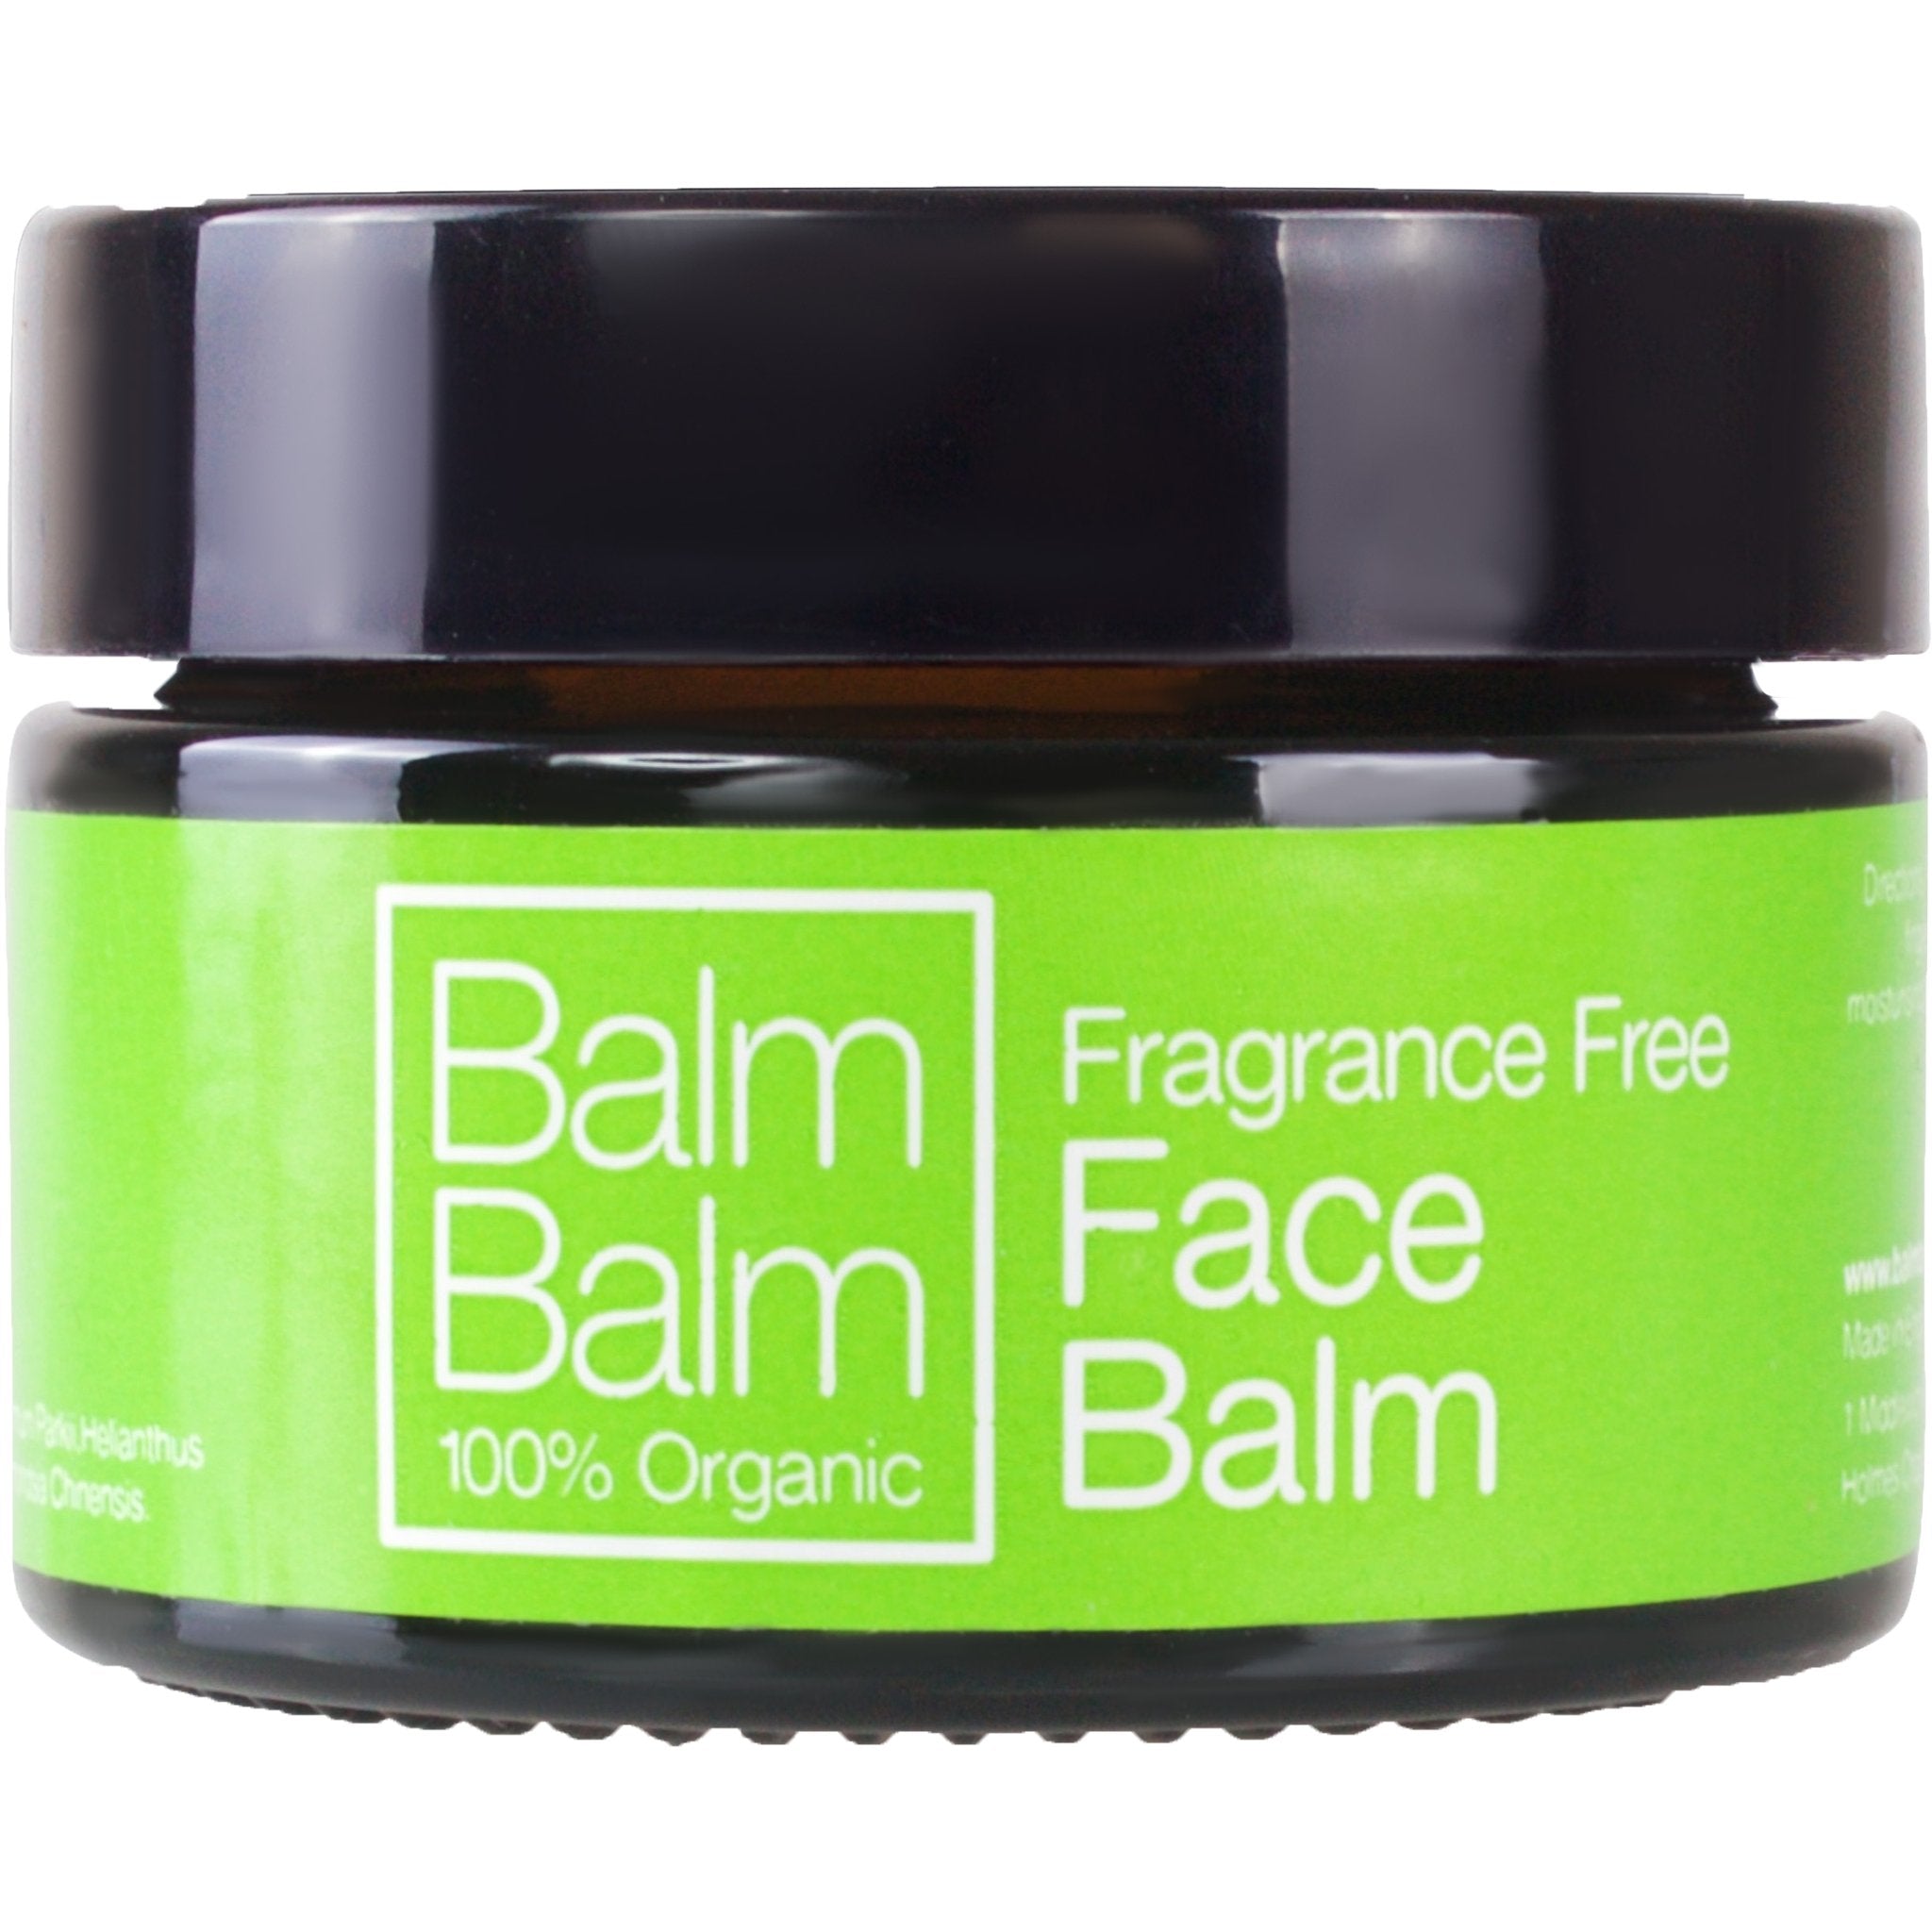 Fragrance Free Face Balm - mypure.co.uk